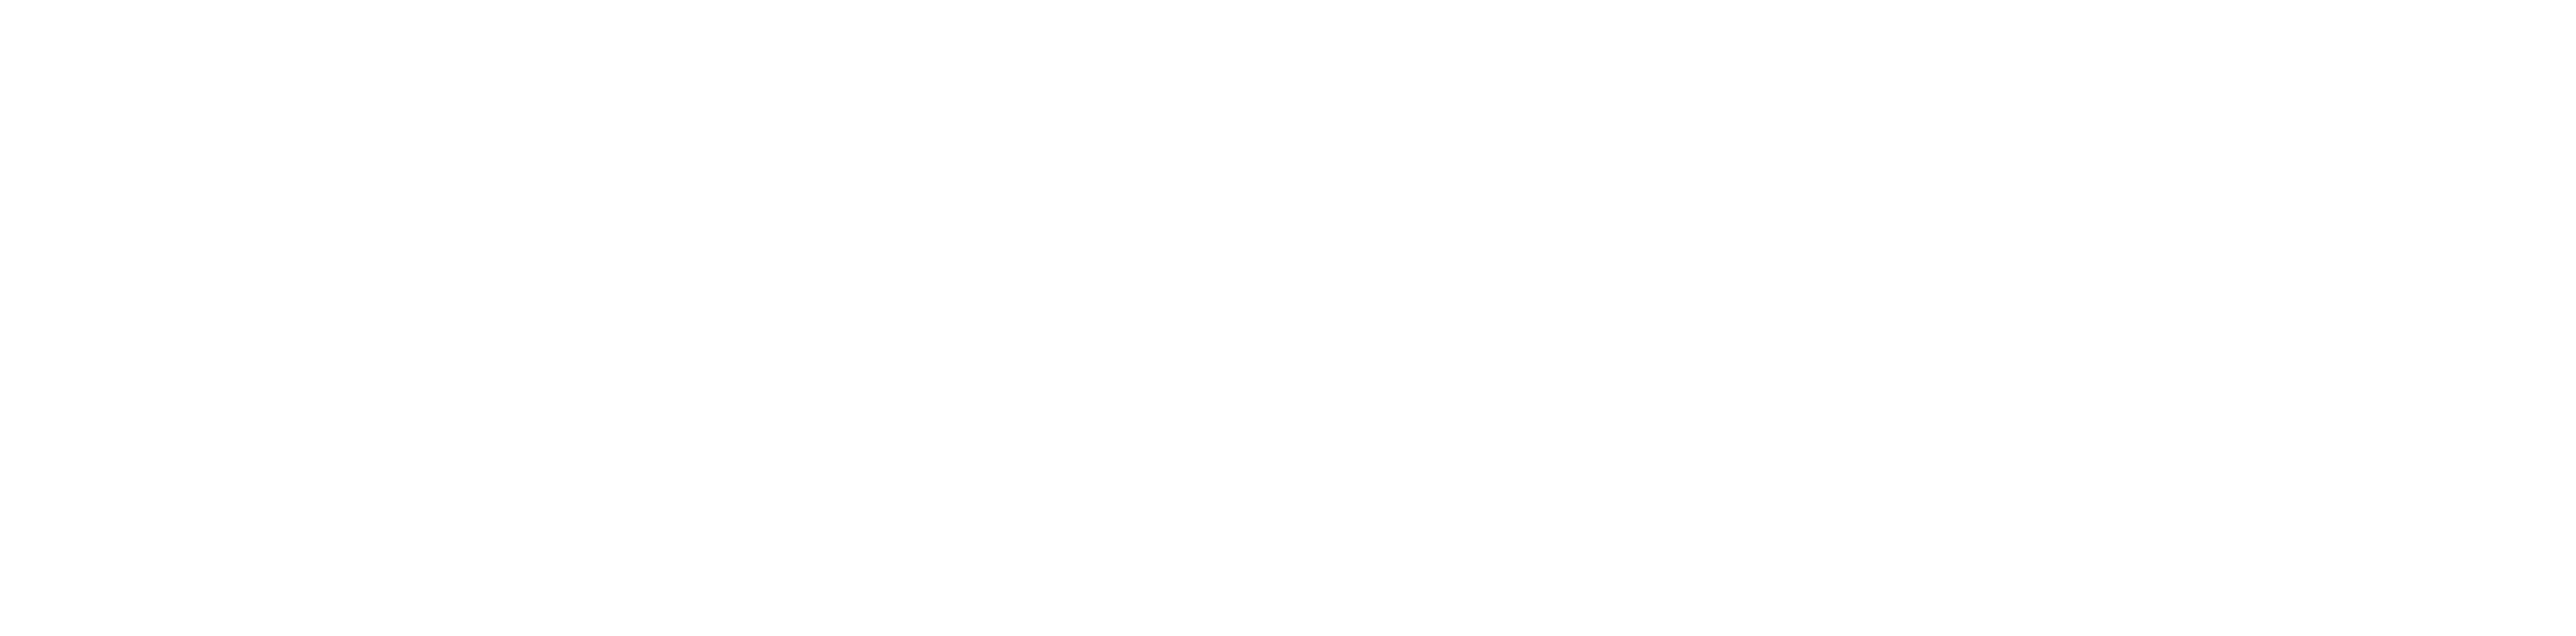 logo-V-white